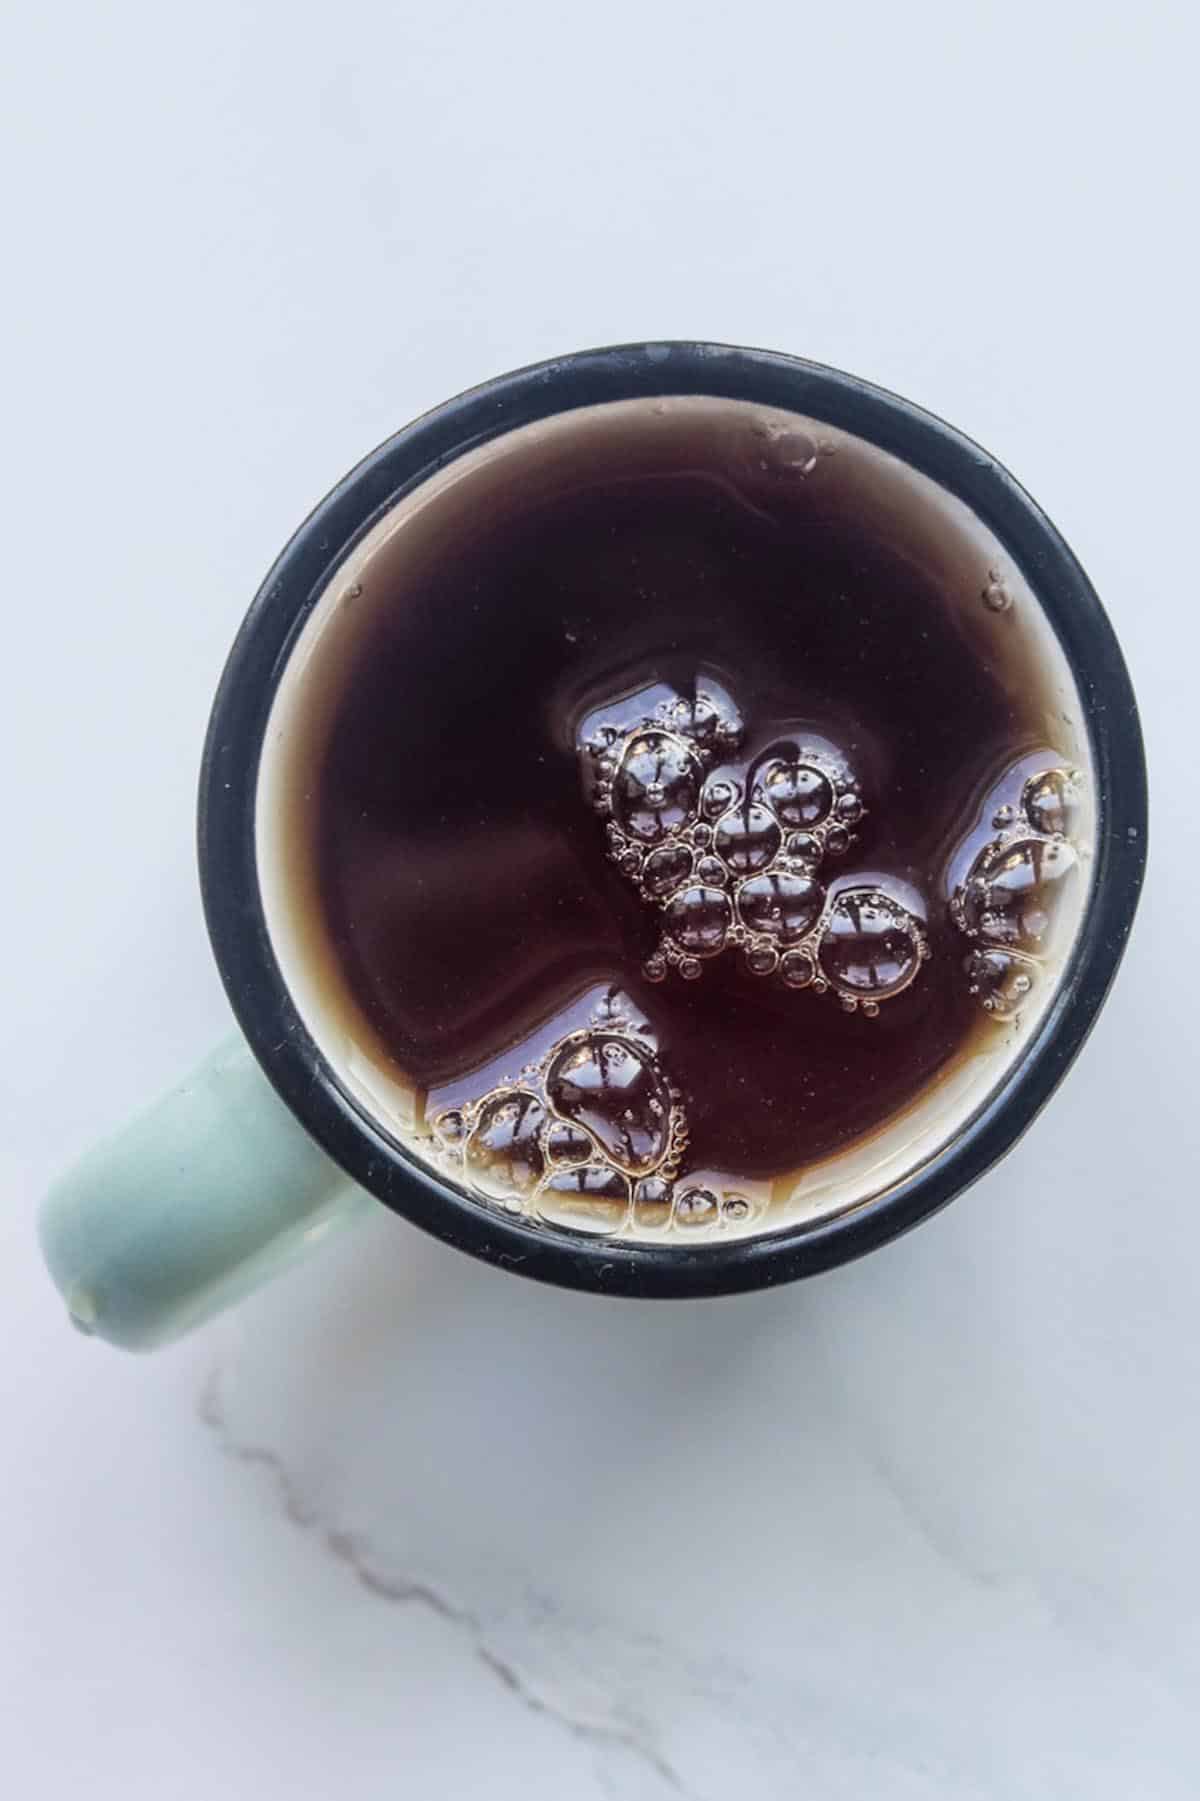 Black tea in a mug.